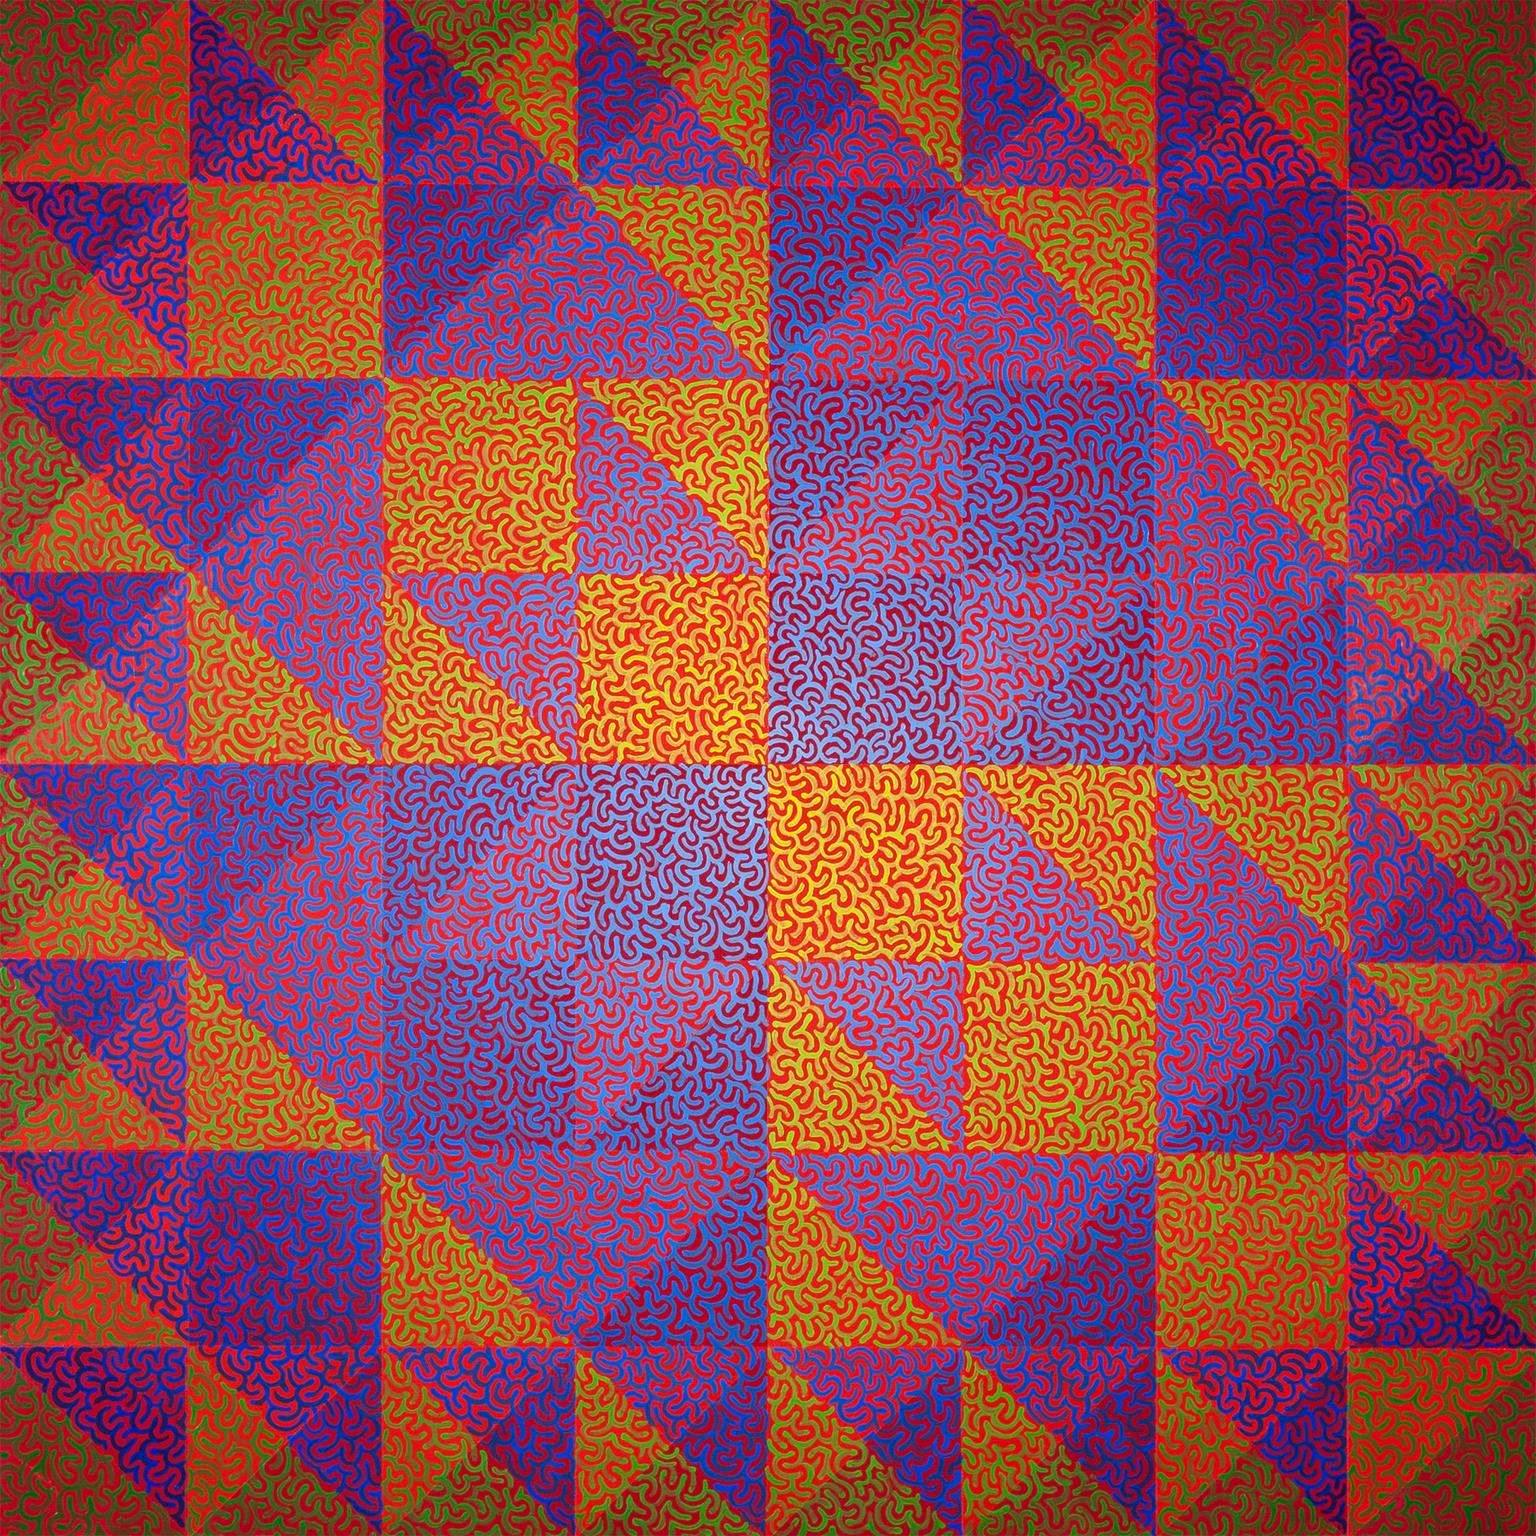 Image for entry 'Sierpinski Squared'